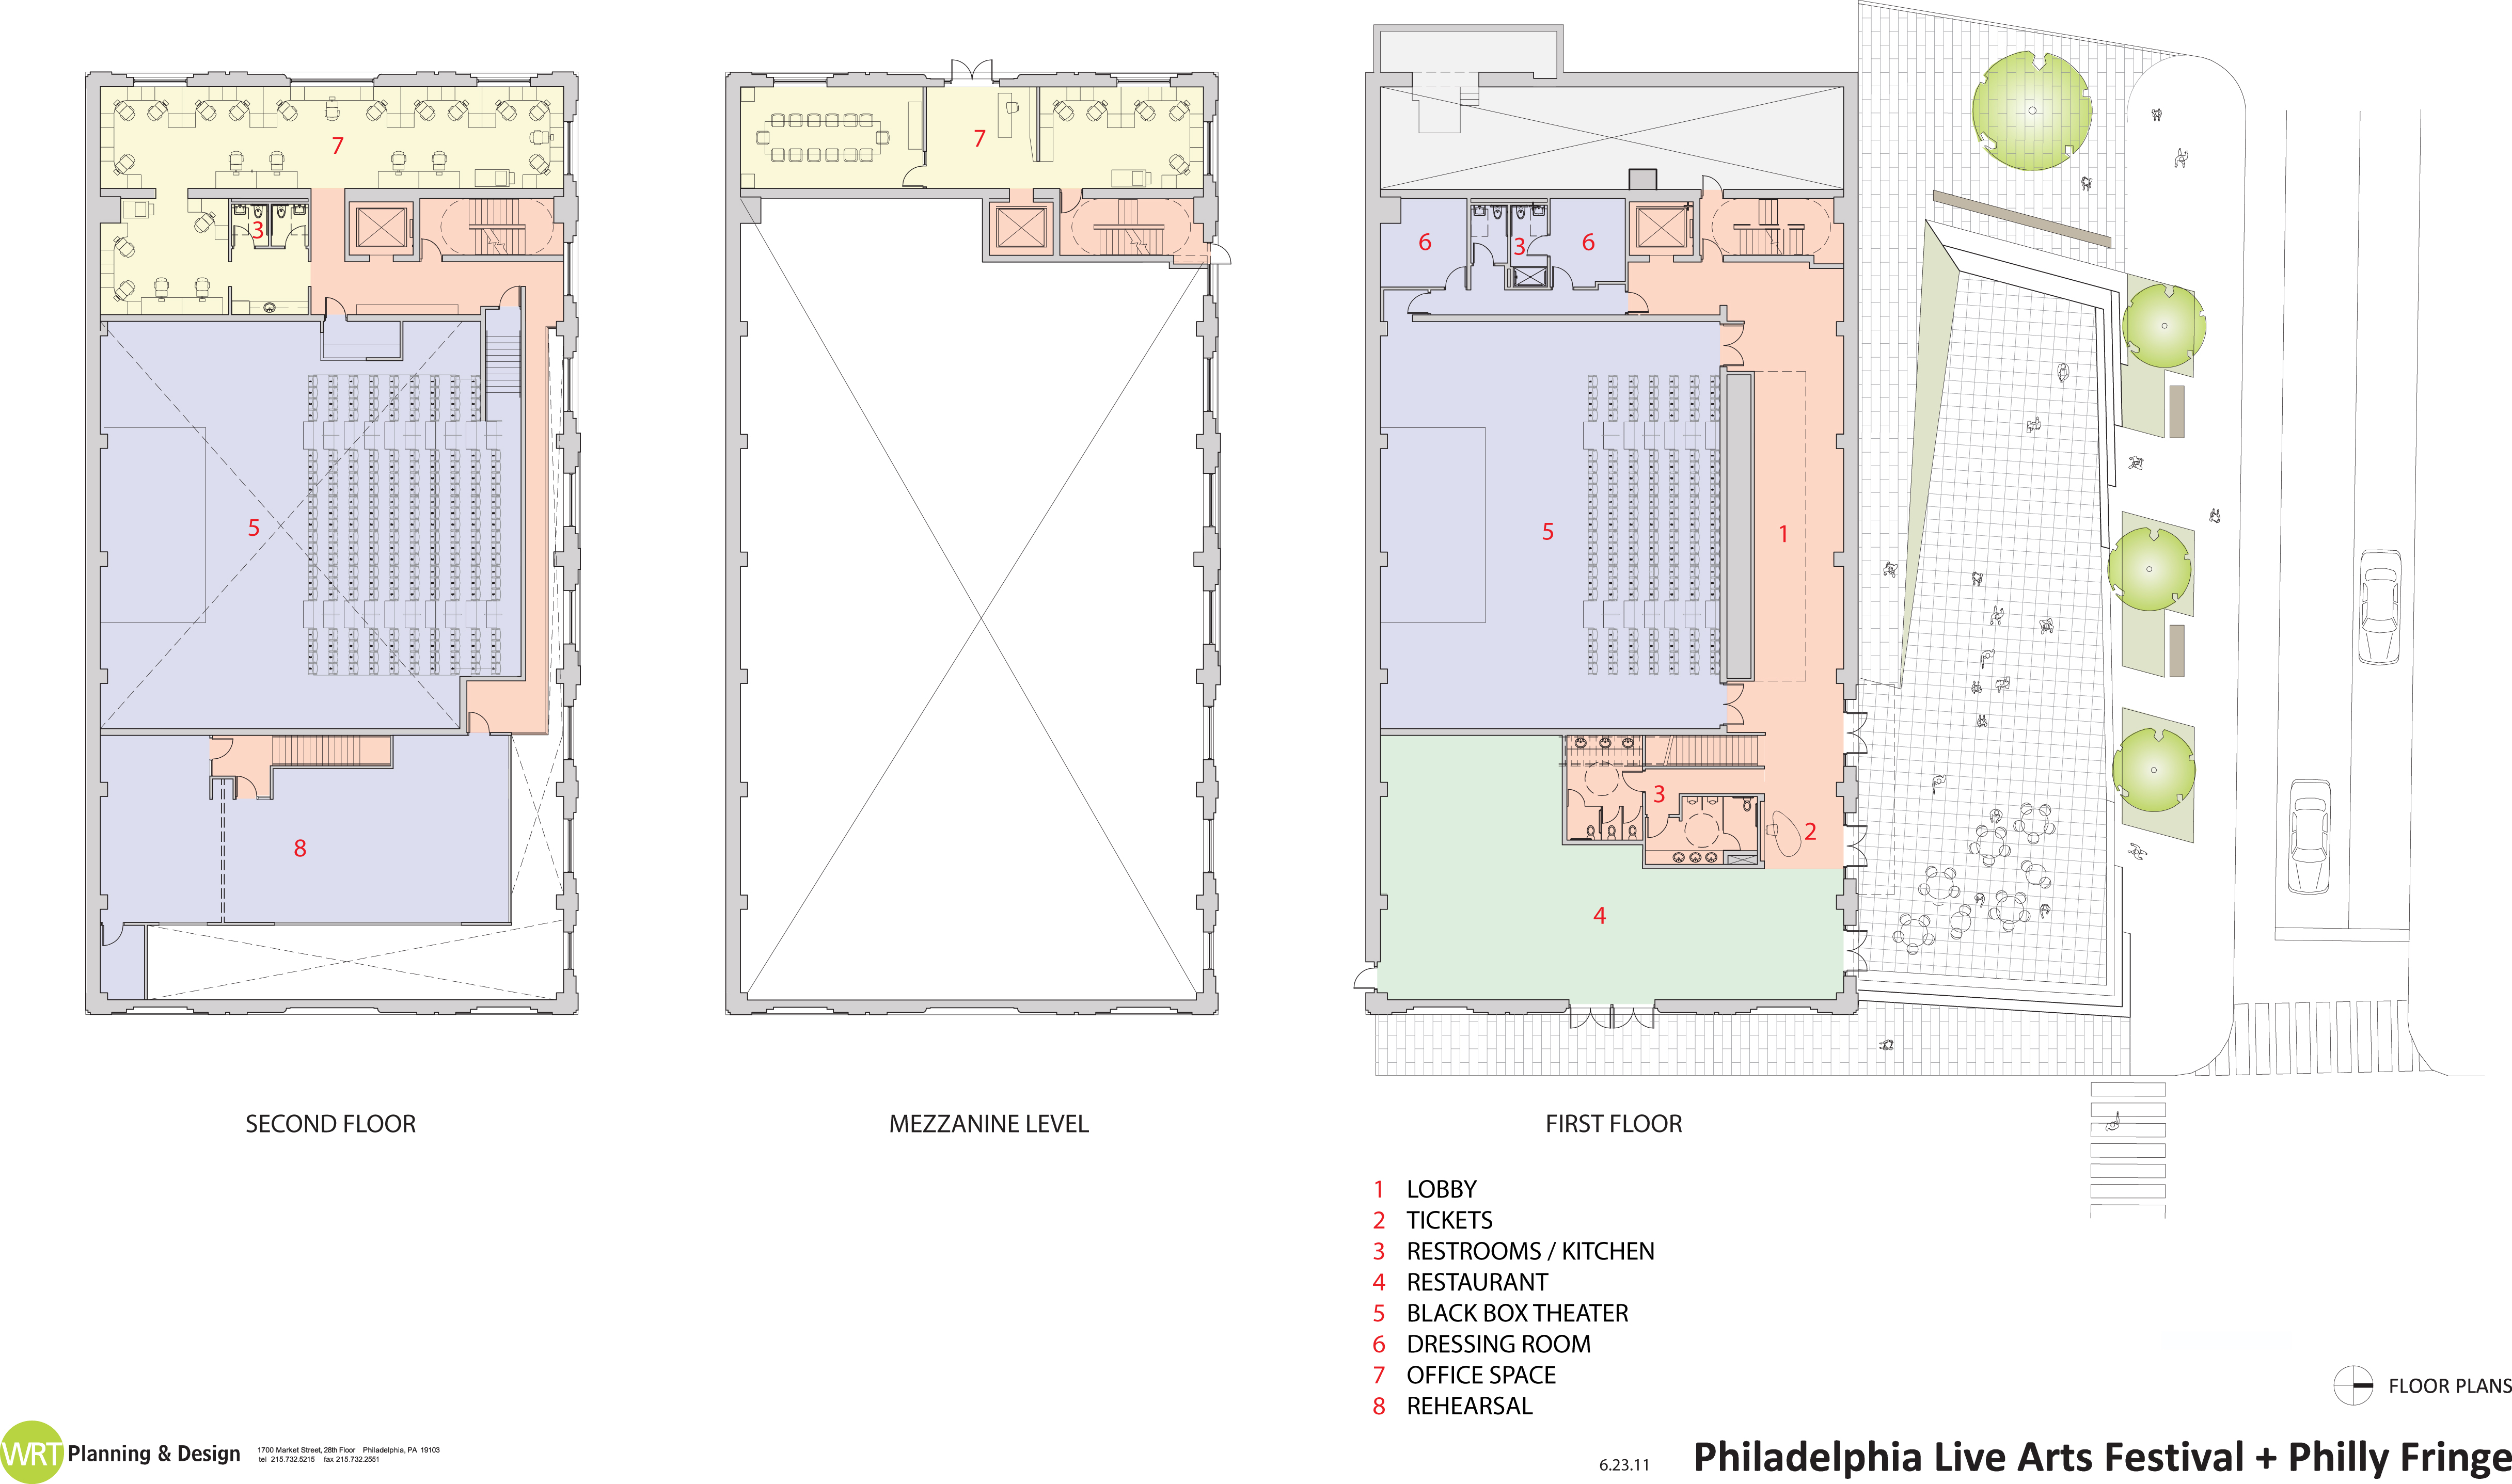 Conceptual Floorplans of Art Center | WRT Planning & Design